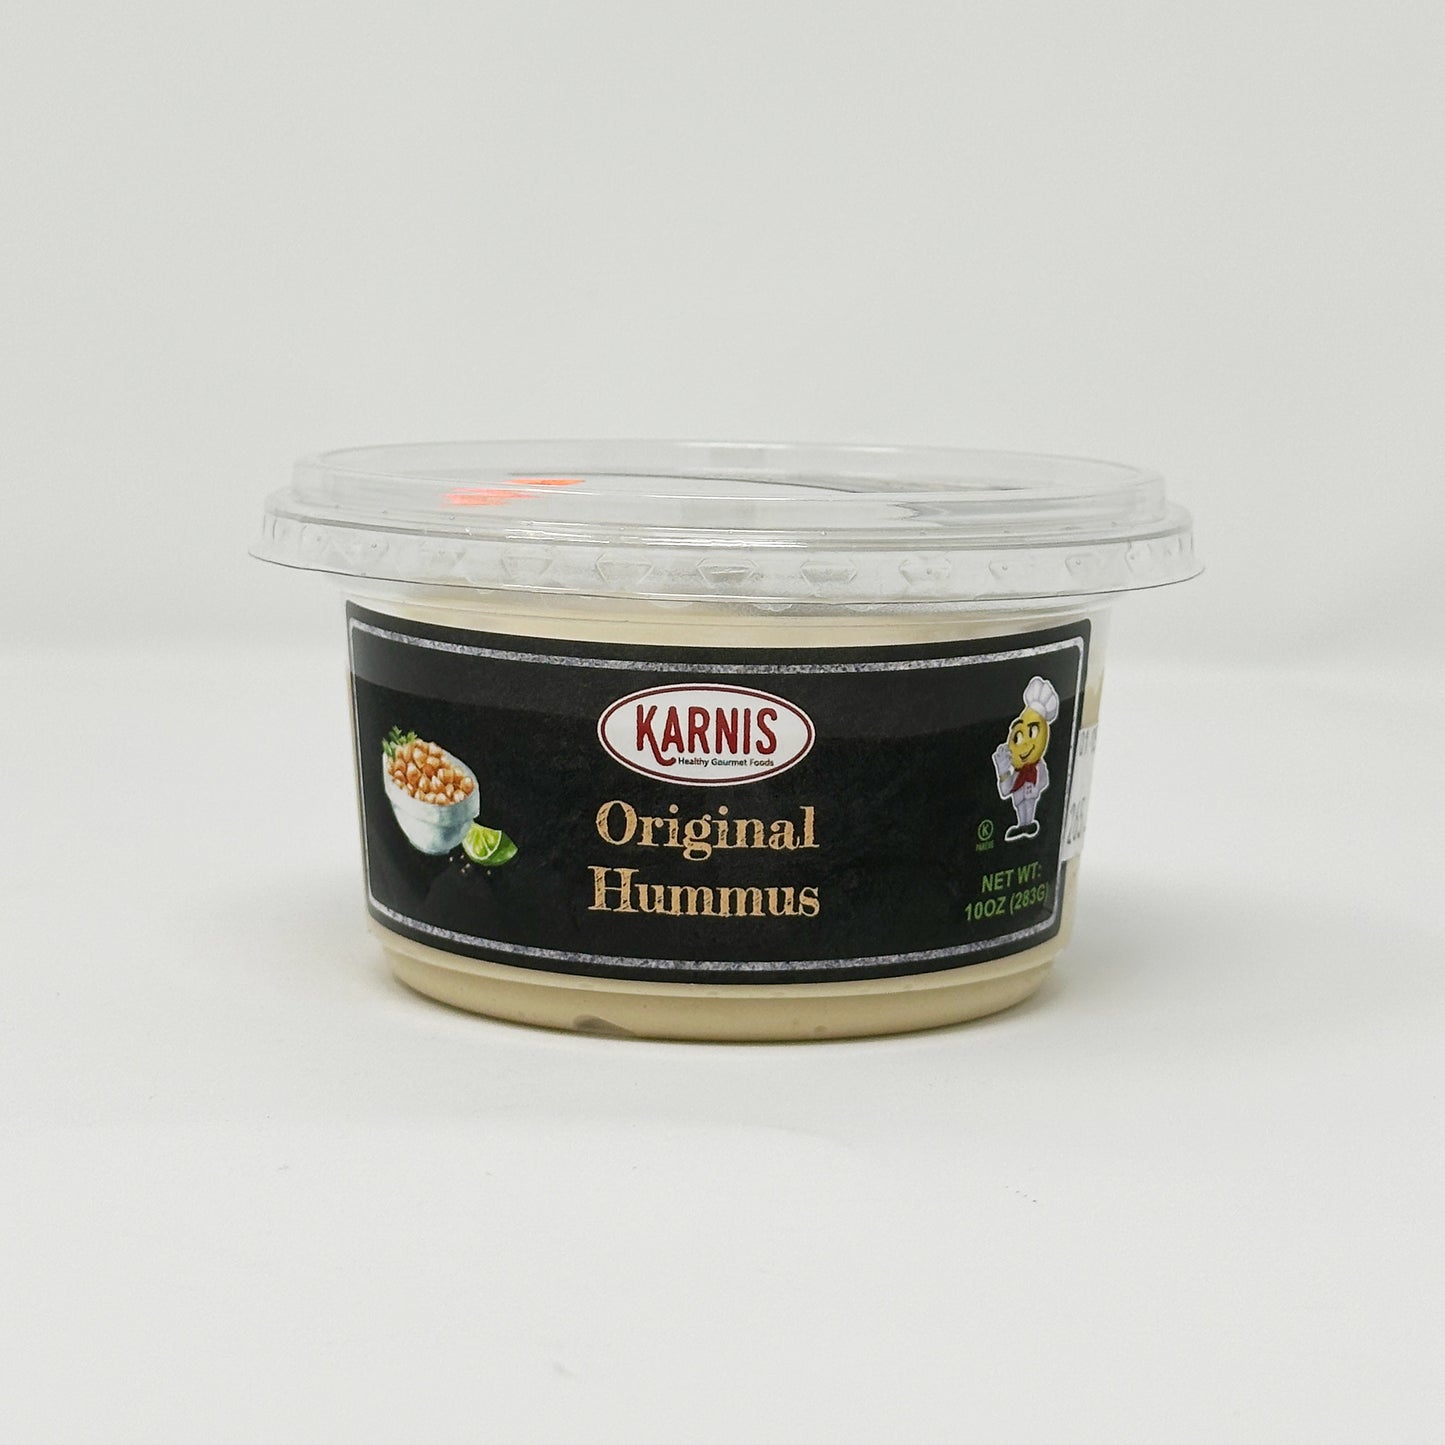 Karnis Original Hummus 10 oz